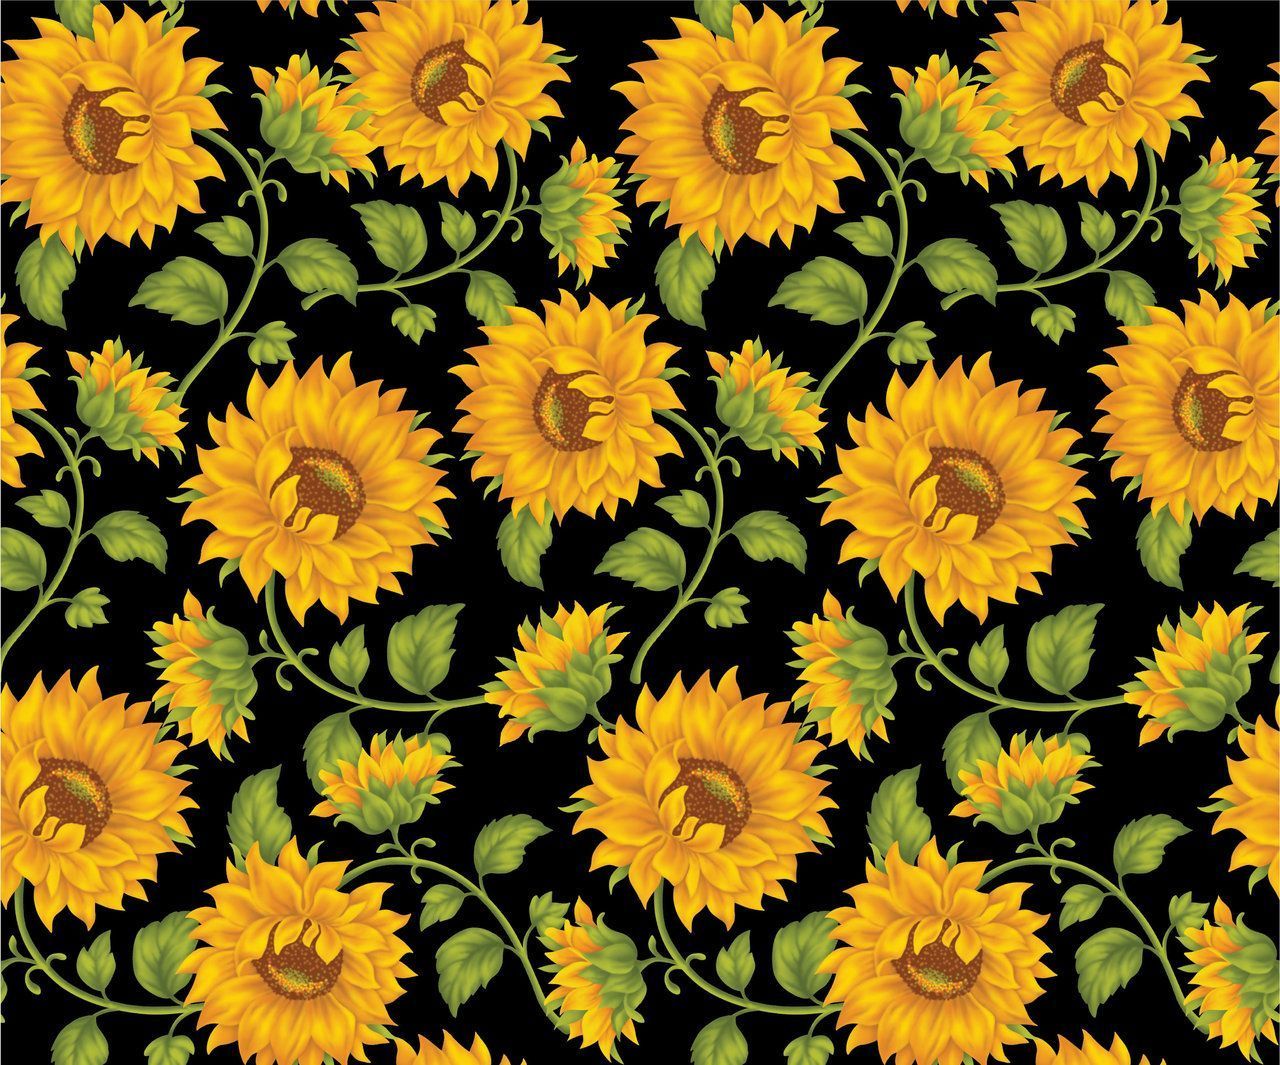 21581) Vintage Sunflower Wallpaper HD - WalOps.com